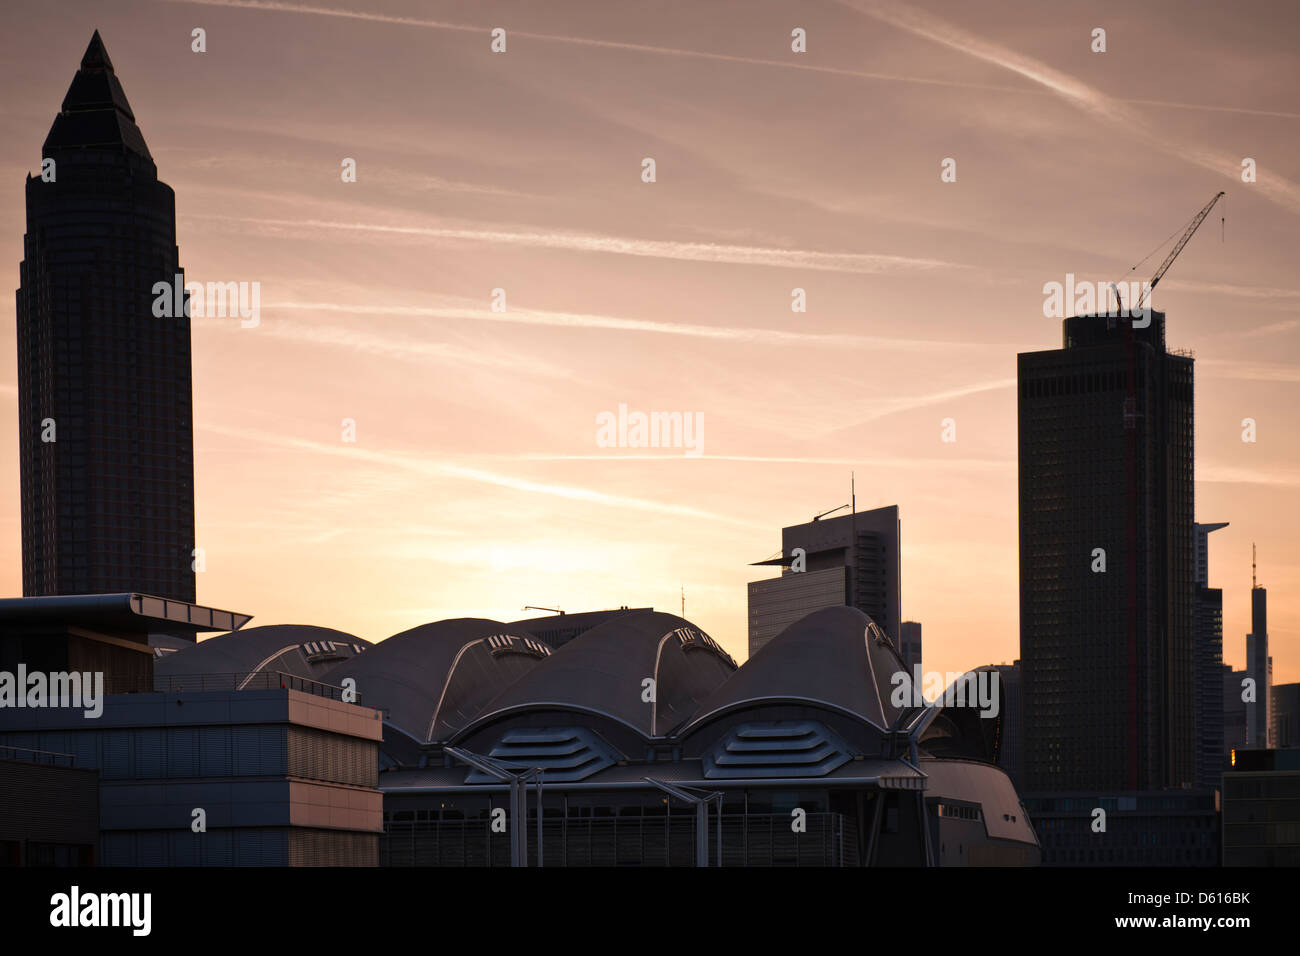 MesseTurm building and the Frankfurt sky at sunrise. Stock Photo